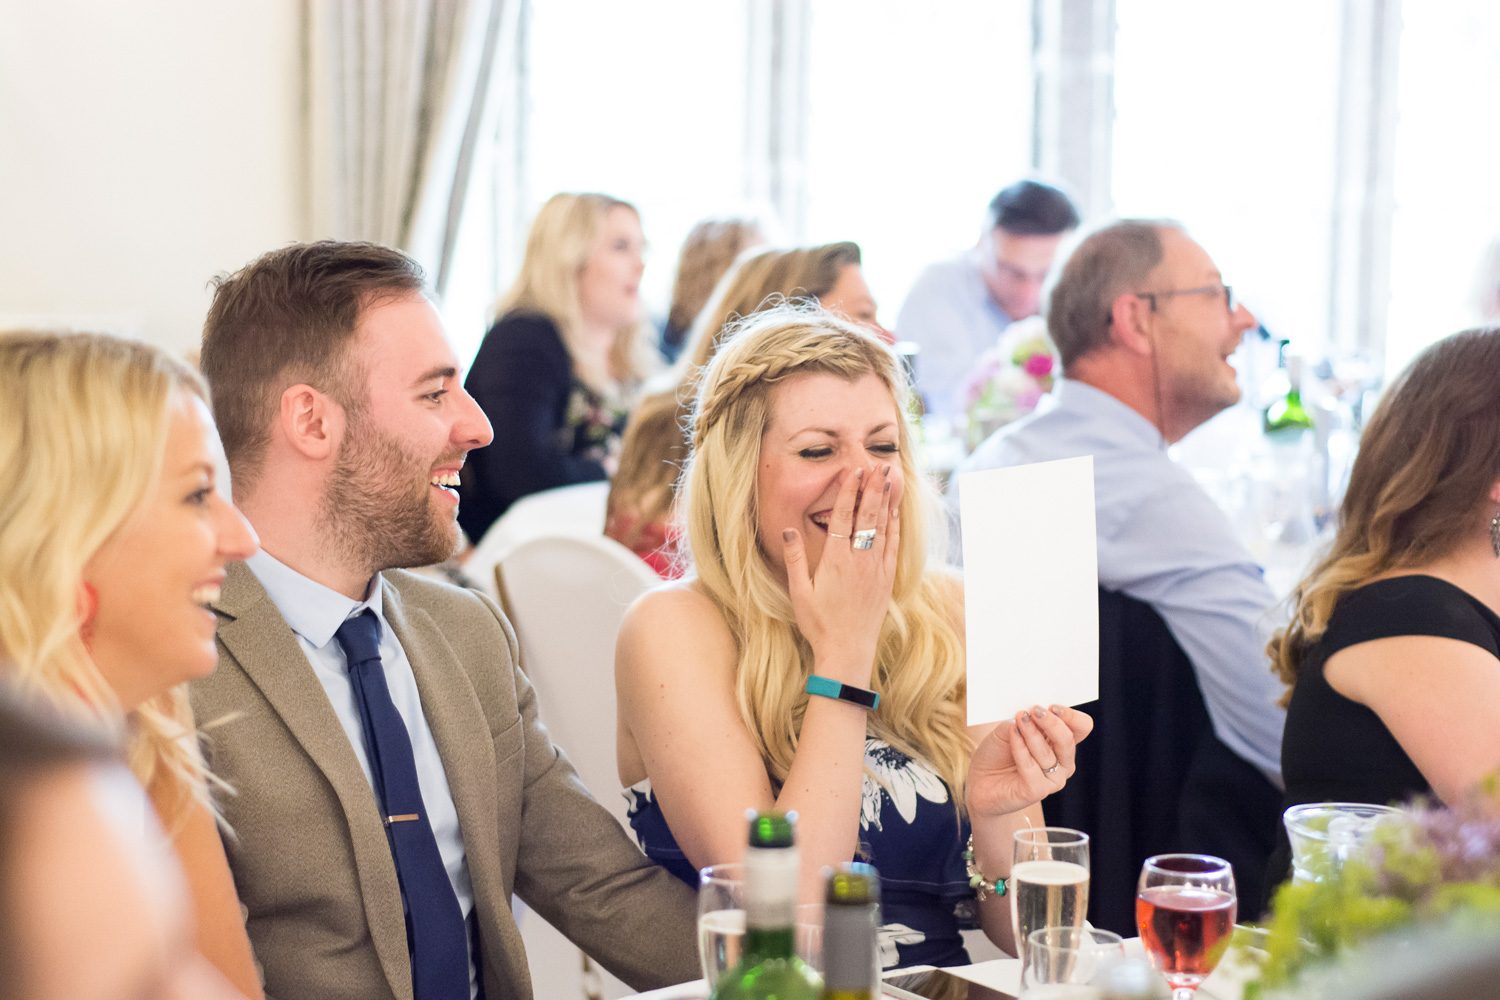 embarrassing photos shared during speeches at boringdon hall wedding